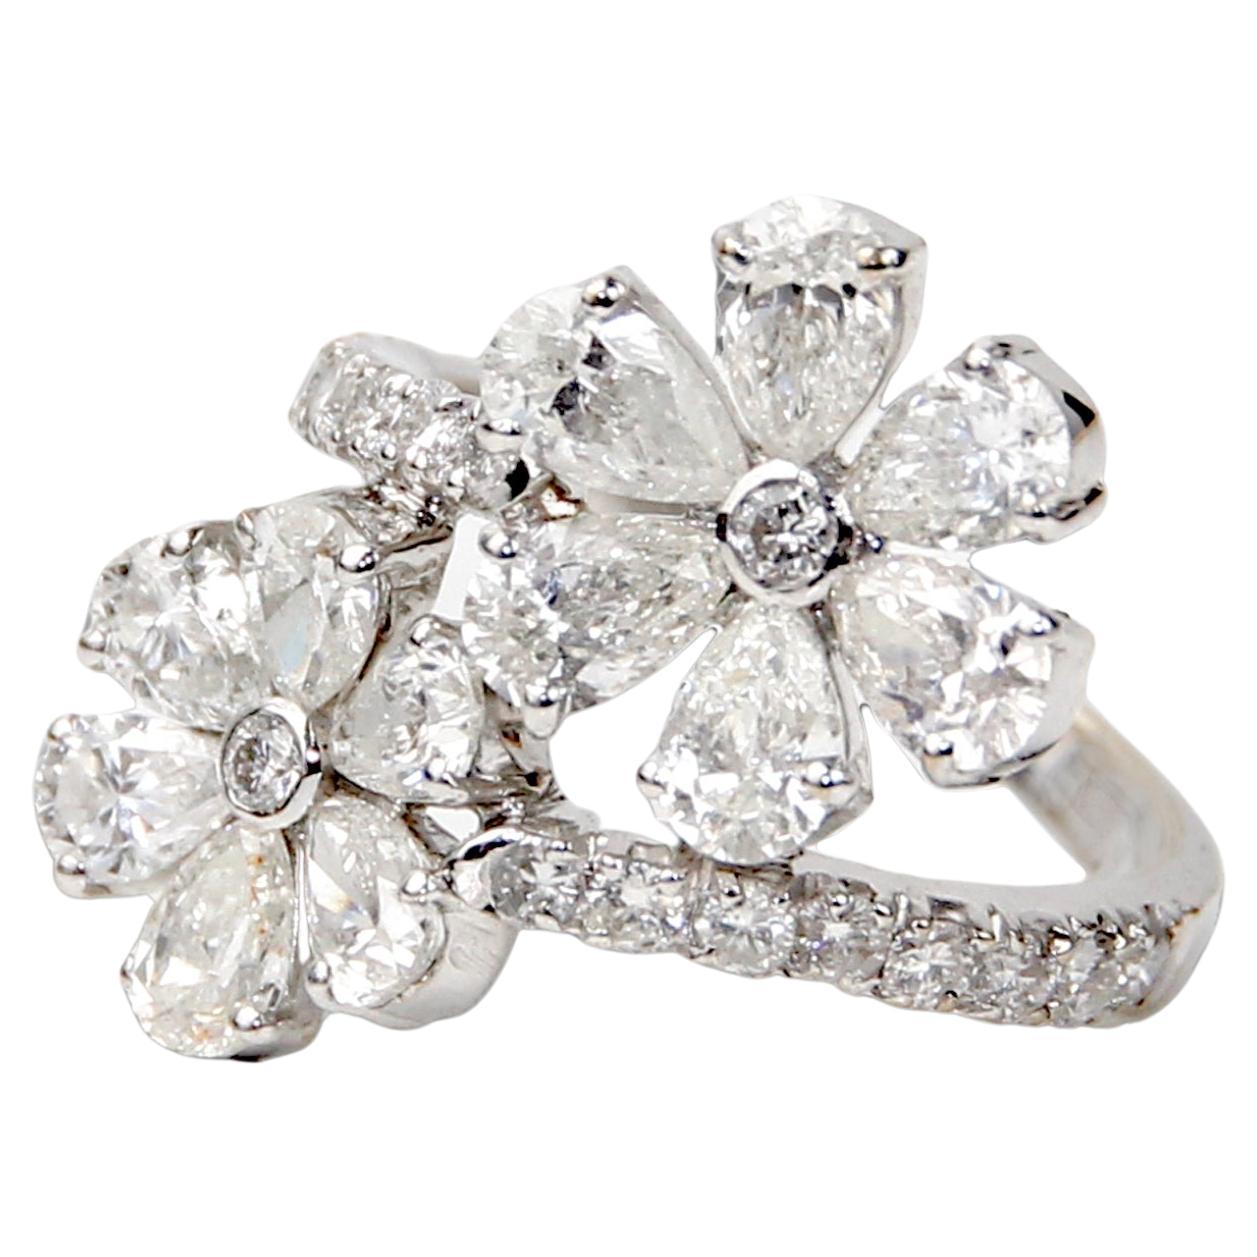 ECJ Collection 18k White Gold 3.67 Carat Diamond Flower Ring